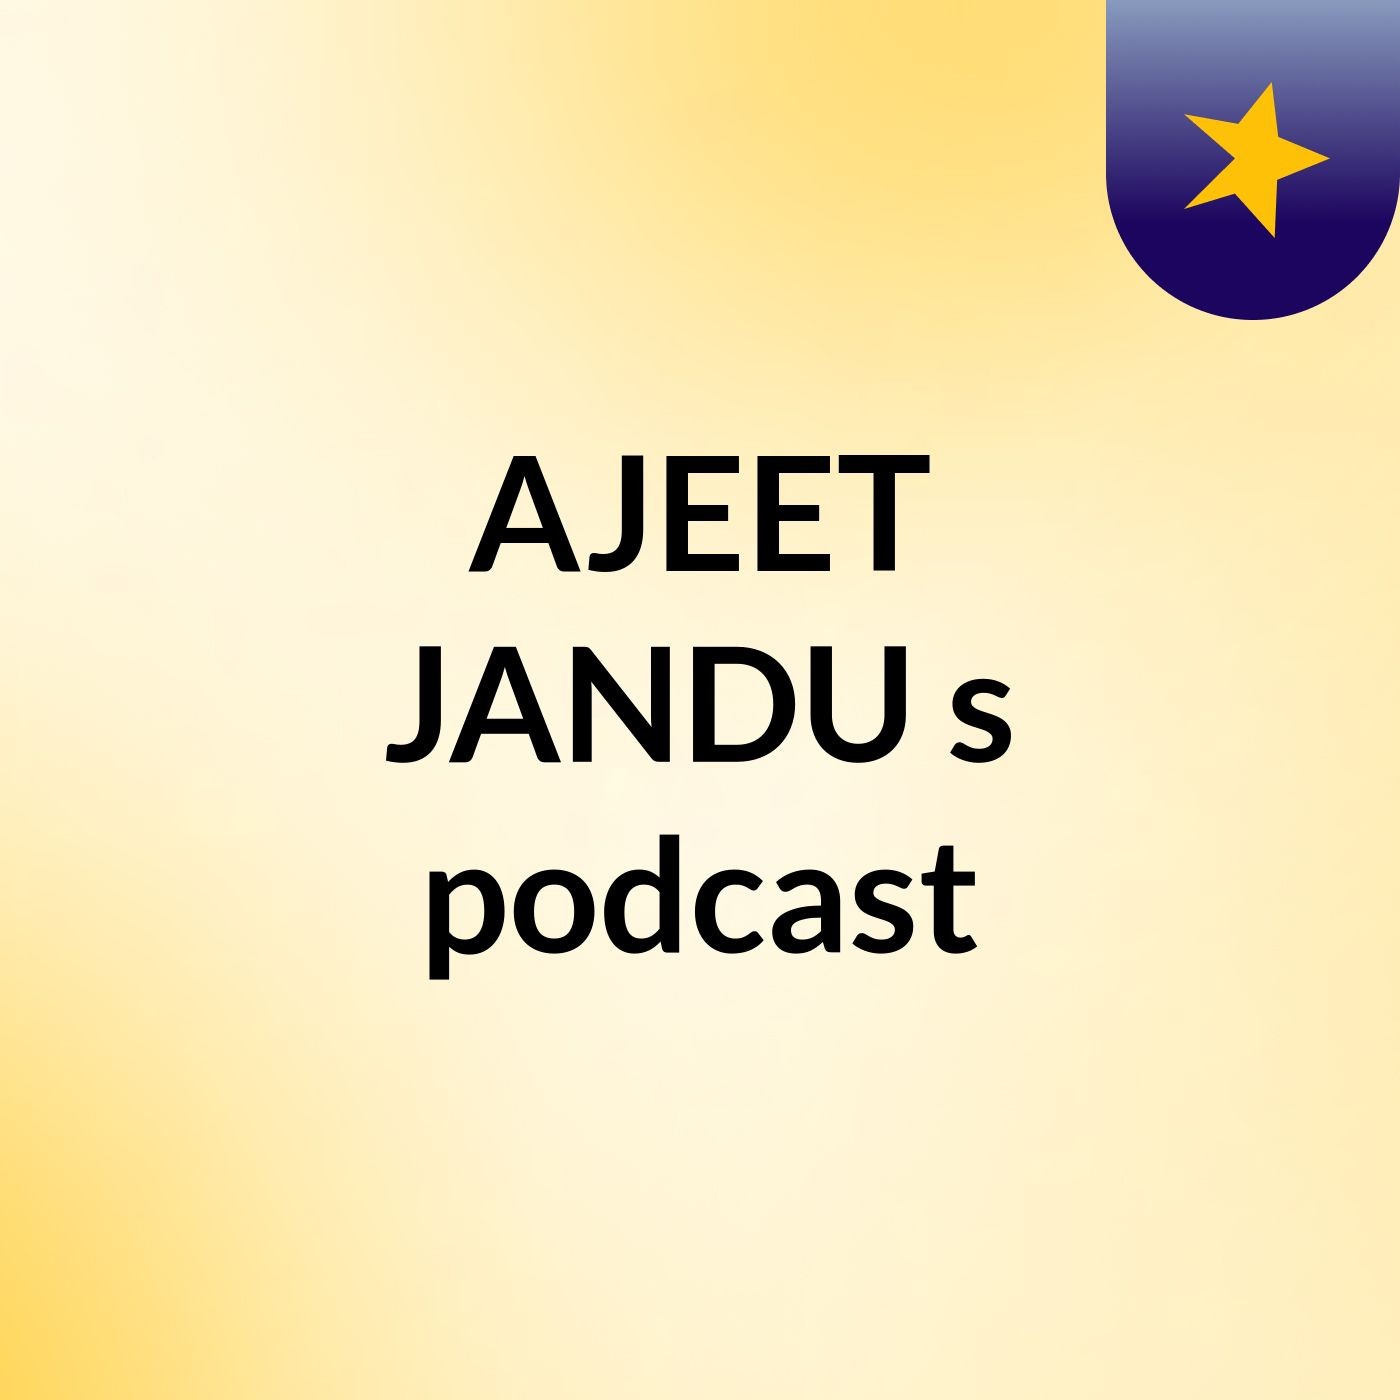 AJEET JANDU's podcast